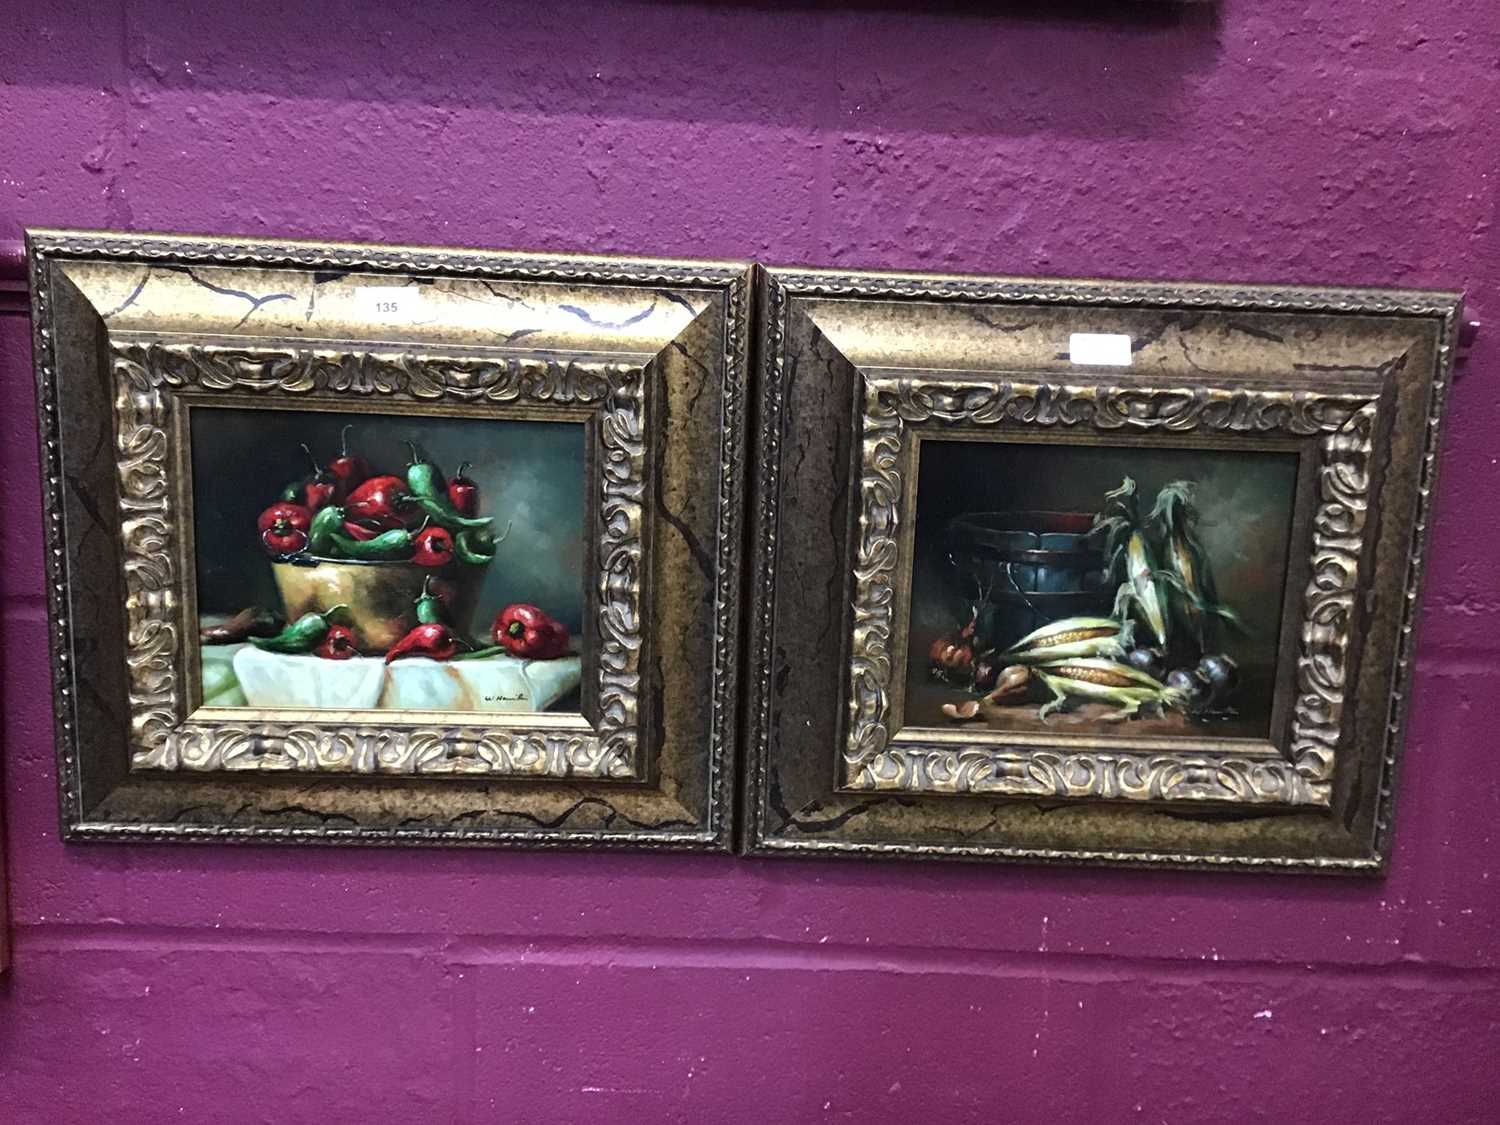 Pair of still life oils on panel depicting fruit and vase in gilt framed, signed I Bianci. 30cm x 40